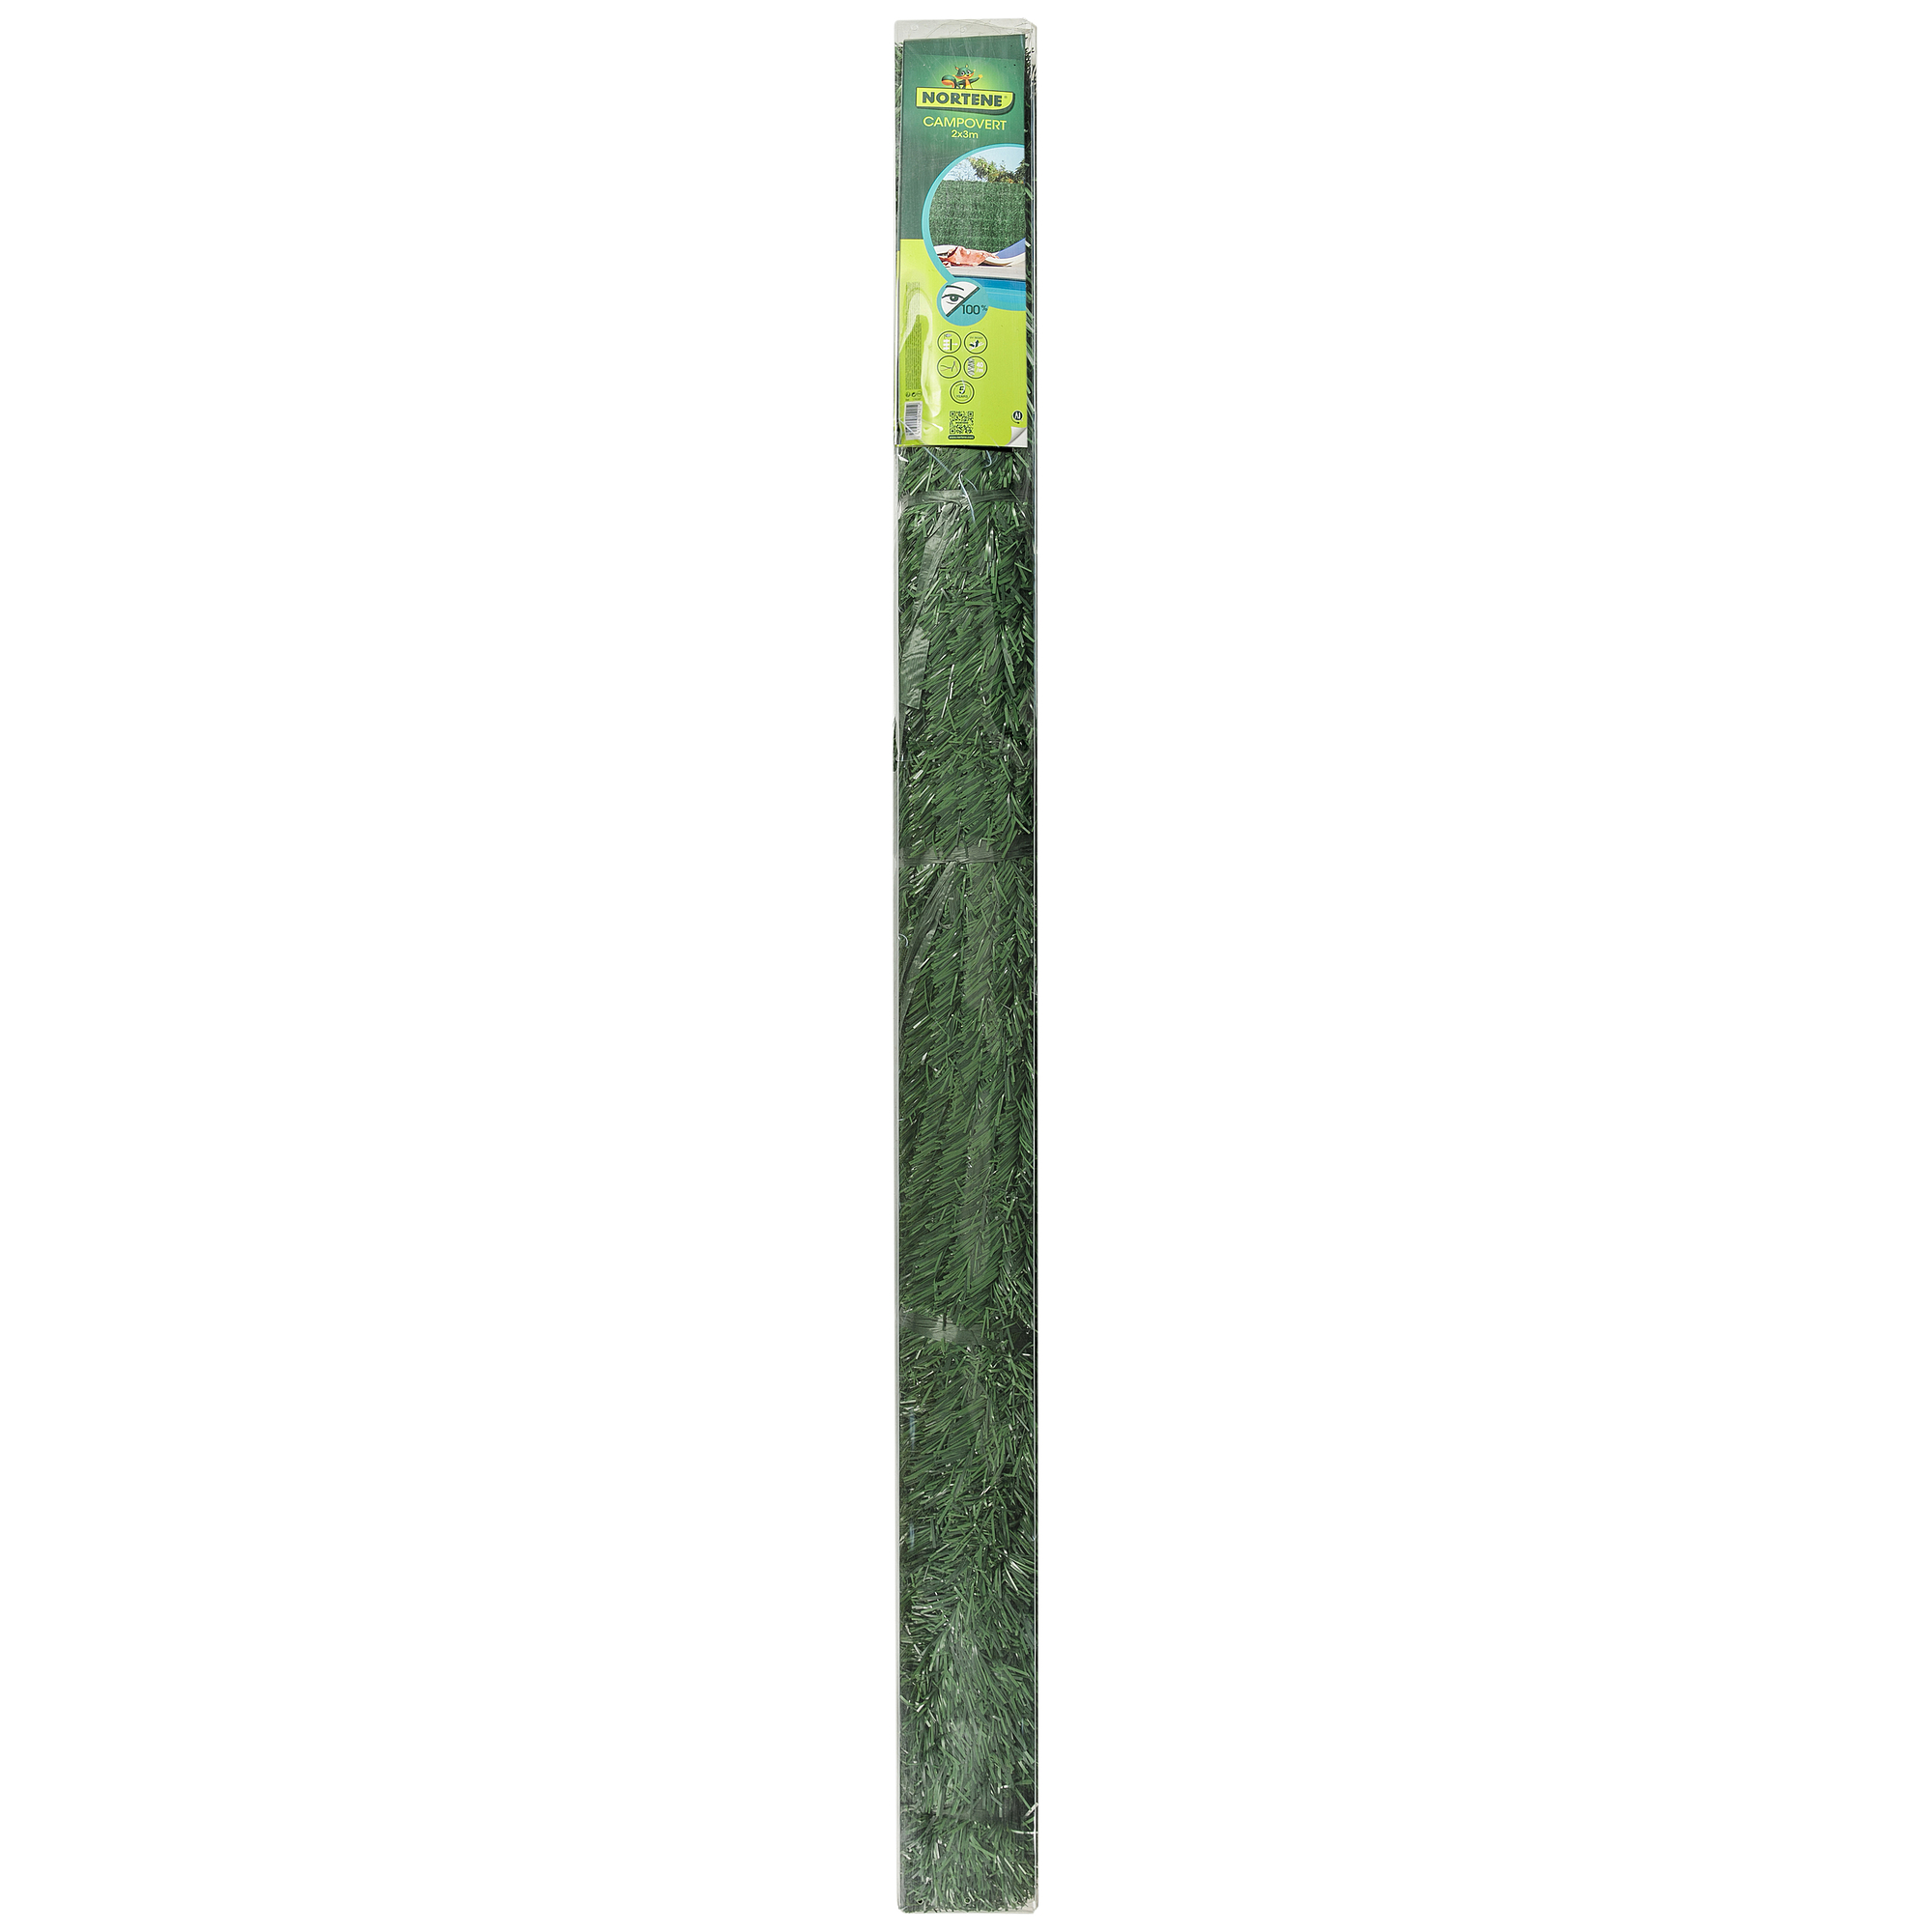 Nortene CAMPOVERT műsövény 100% - 2 x 3 m -  zöld - 174167